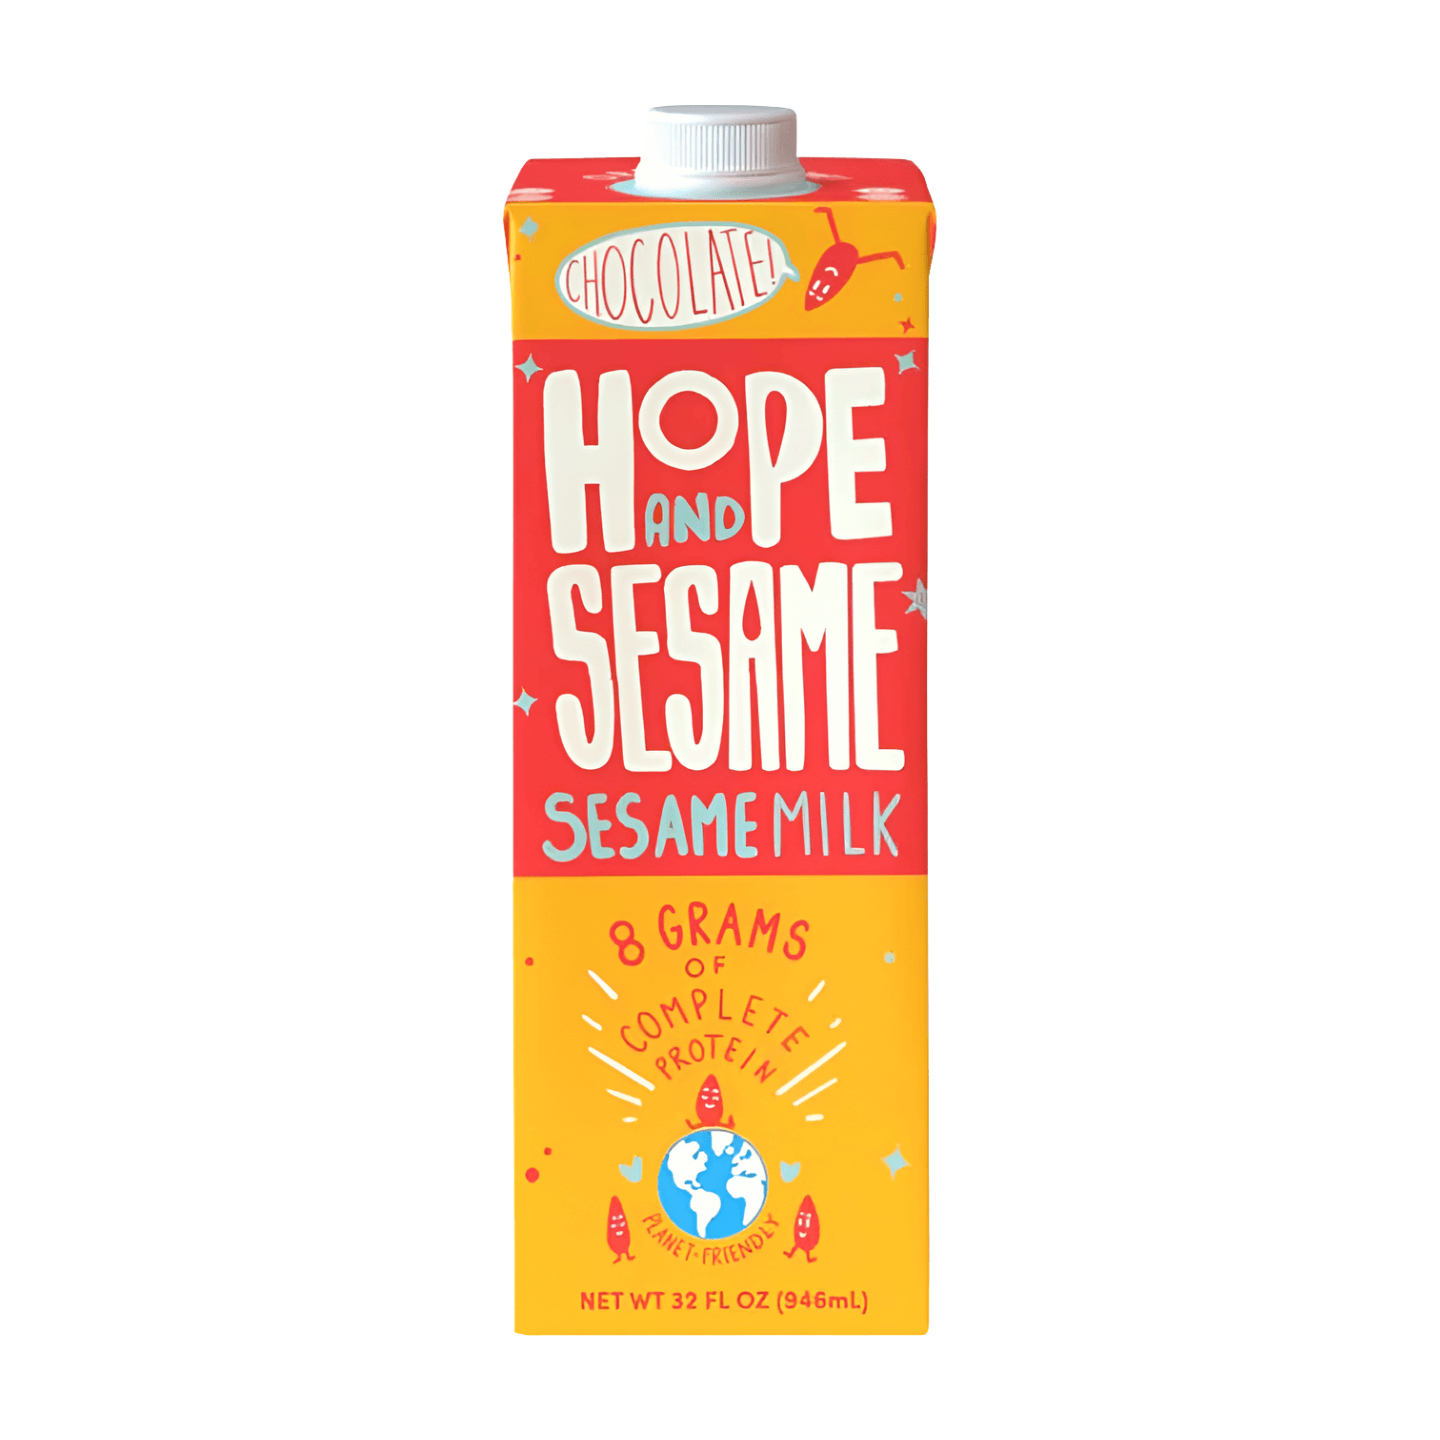 Hope And Sesame Chocolate Sesamemilk